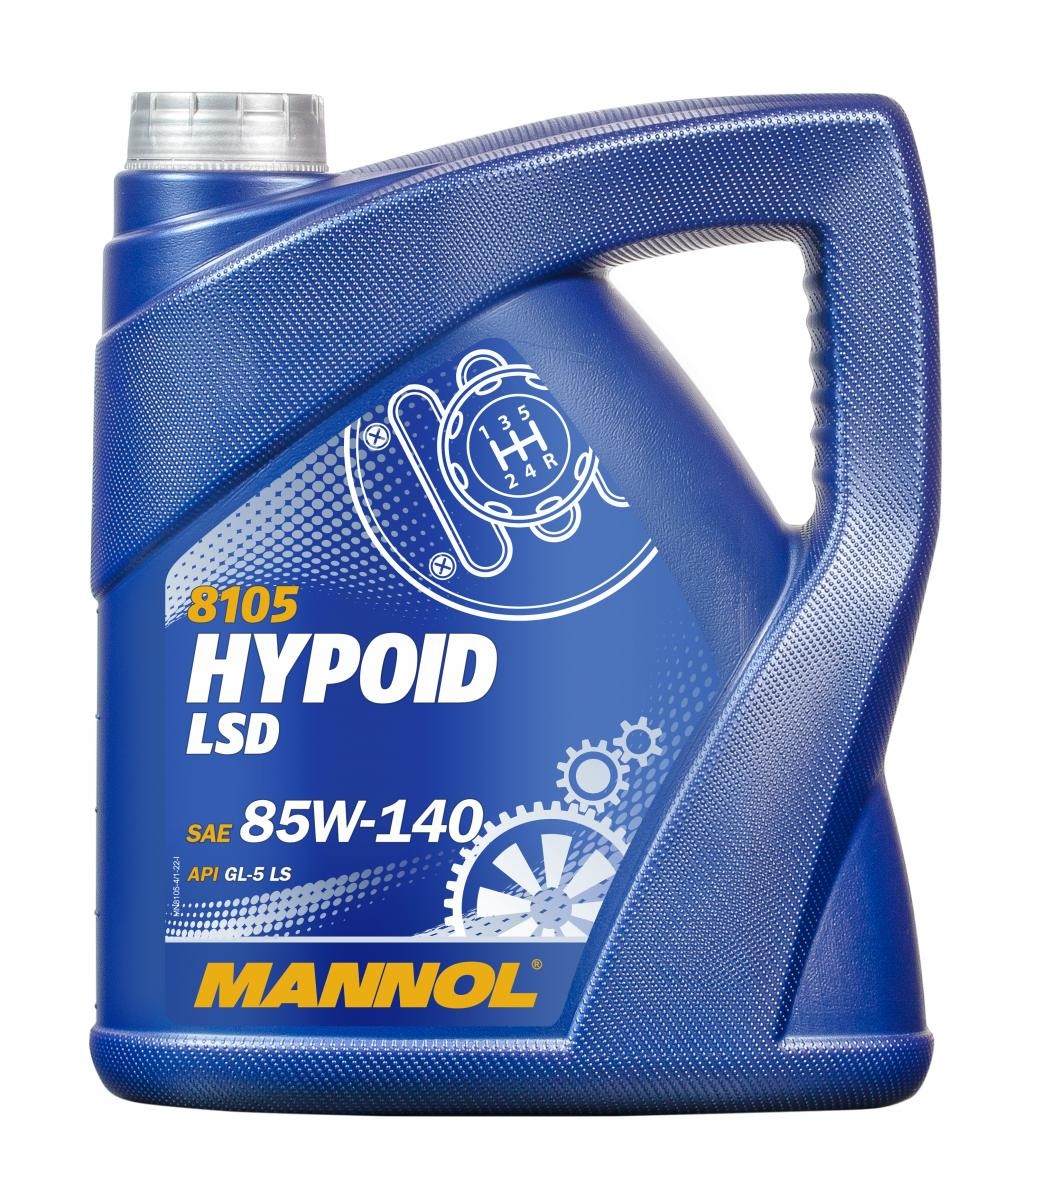 MANNOL HYPOID LSD 85W-140, Mineralöl, Inhalt: 4l MIL-L 2105 D Getriebeöl MN8105-4 kaufen